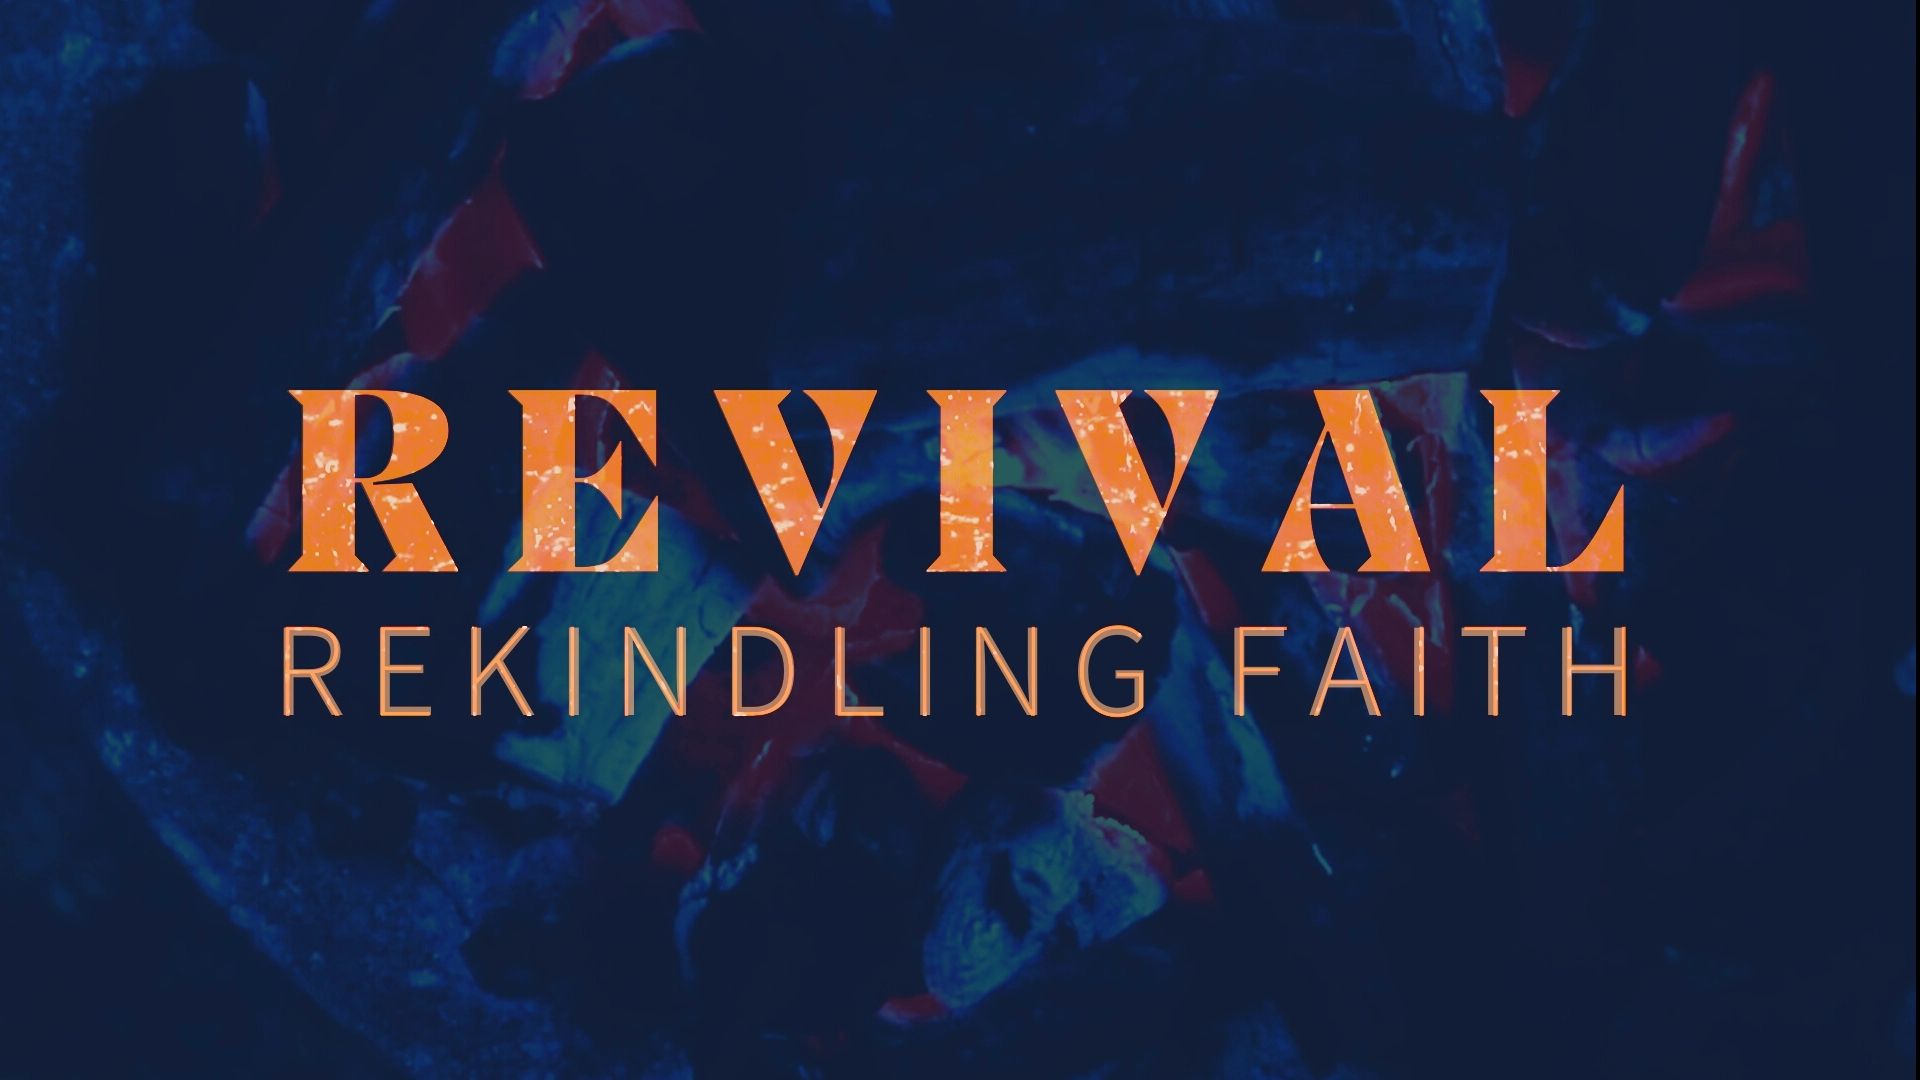 Revival: Rekindling Faith